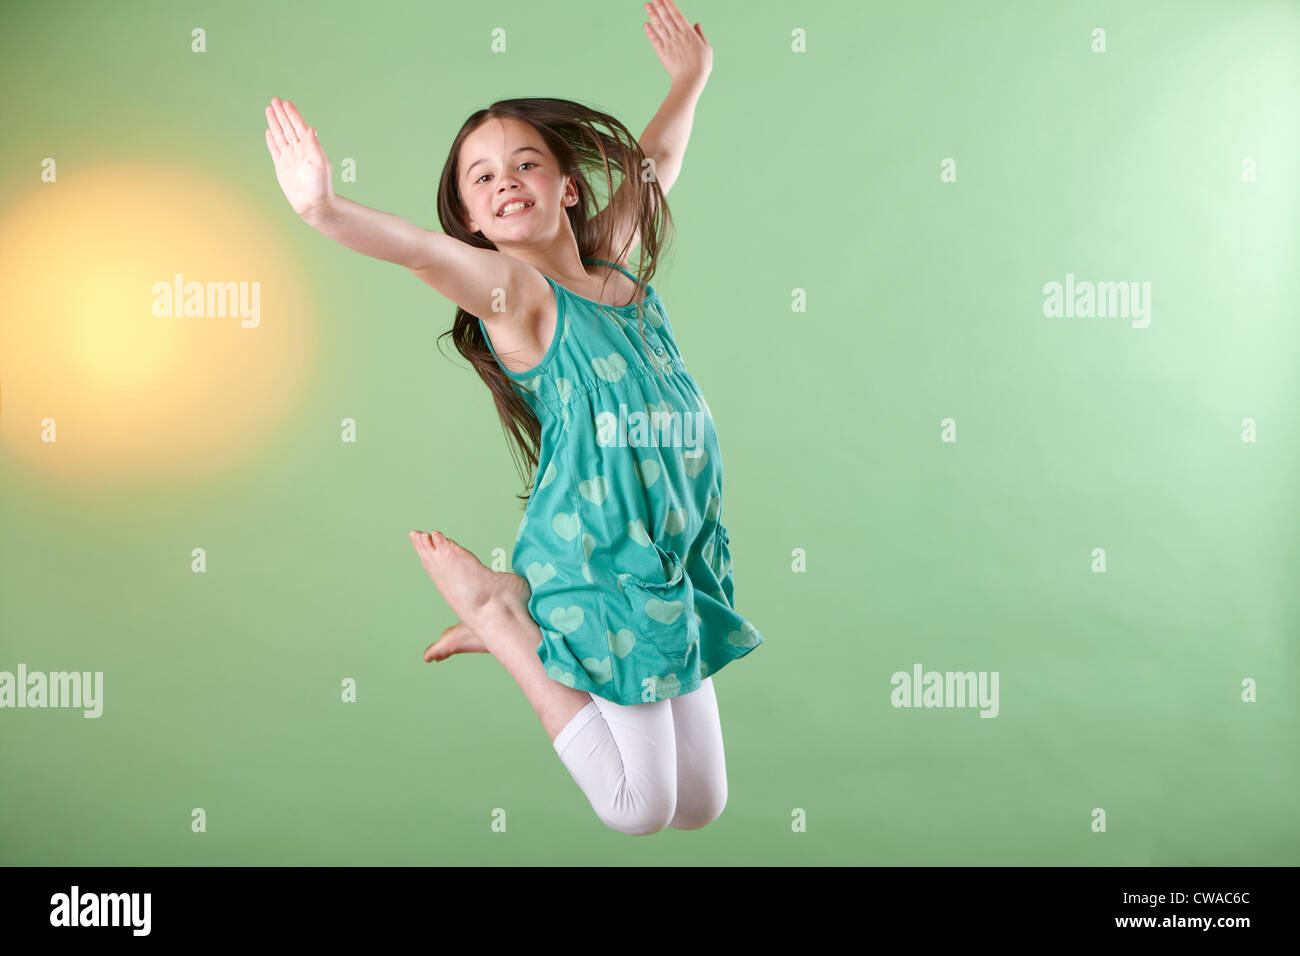 Girl jumping, mid air Stock Photo